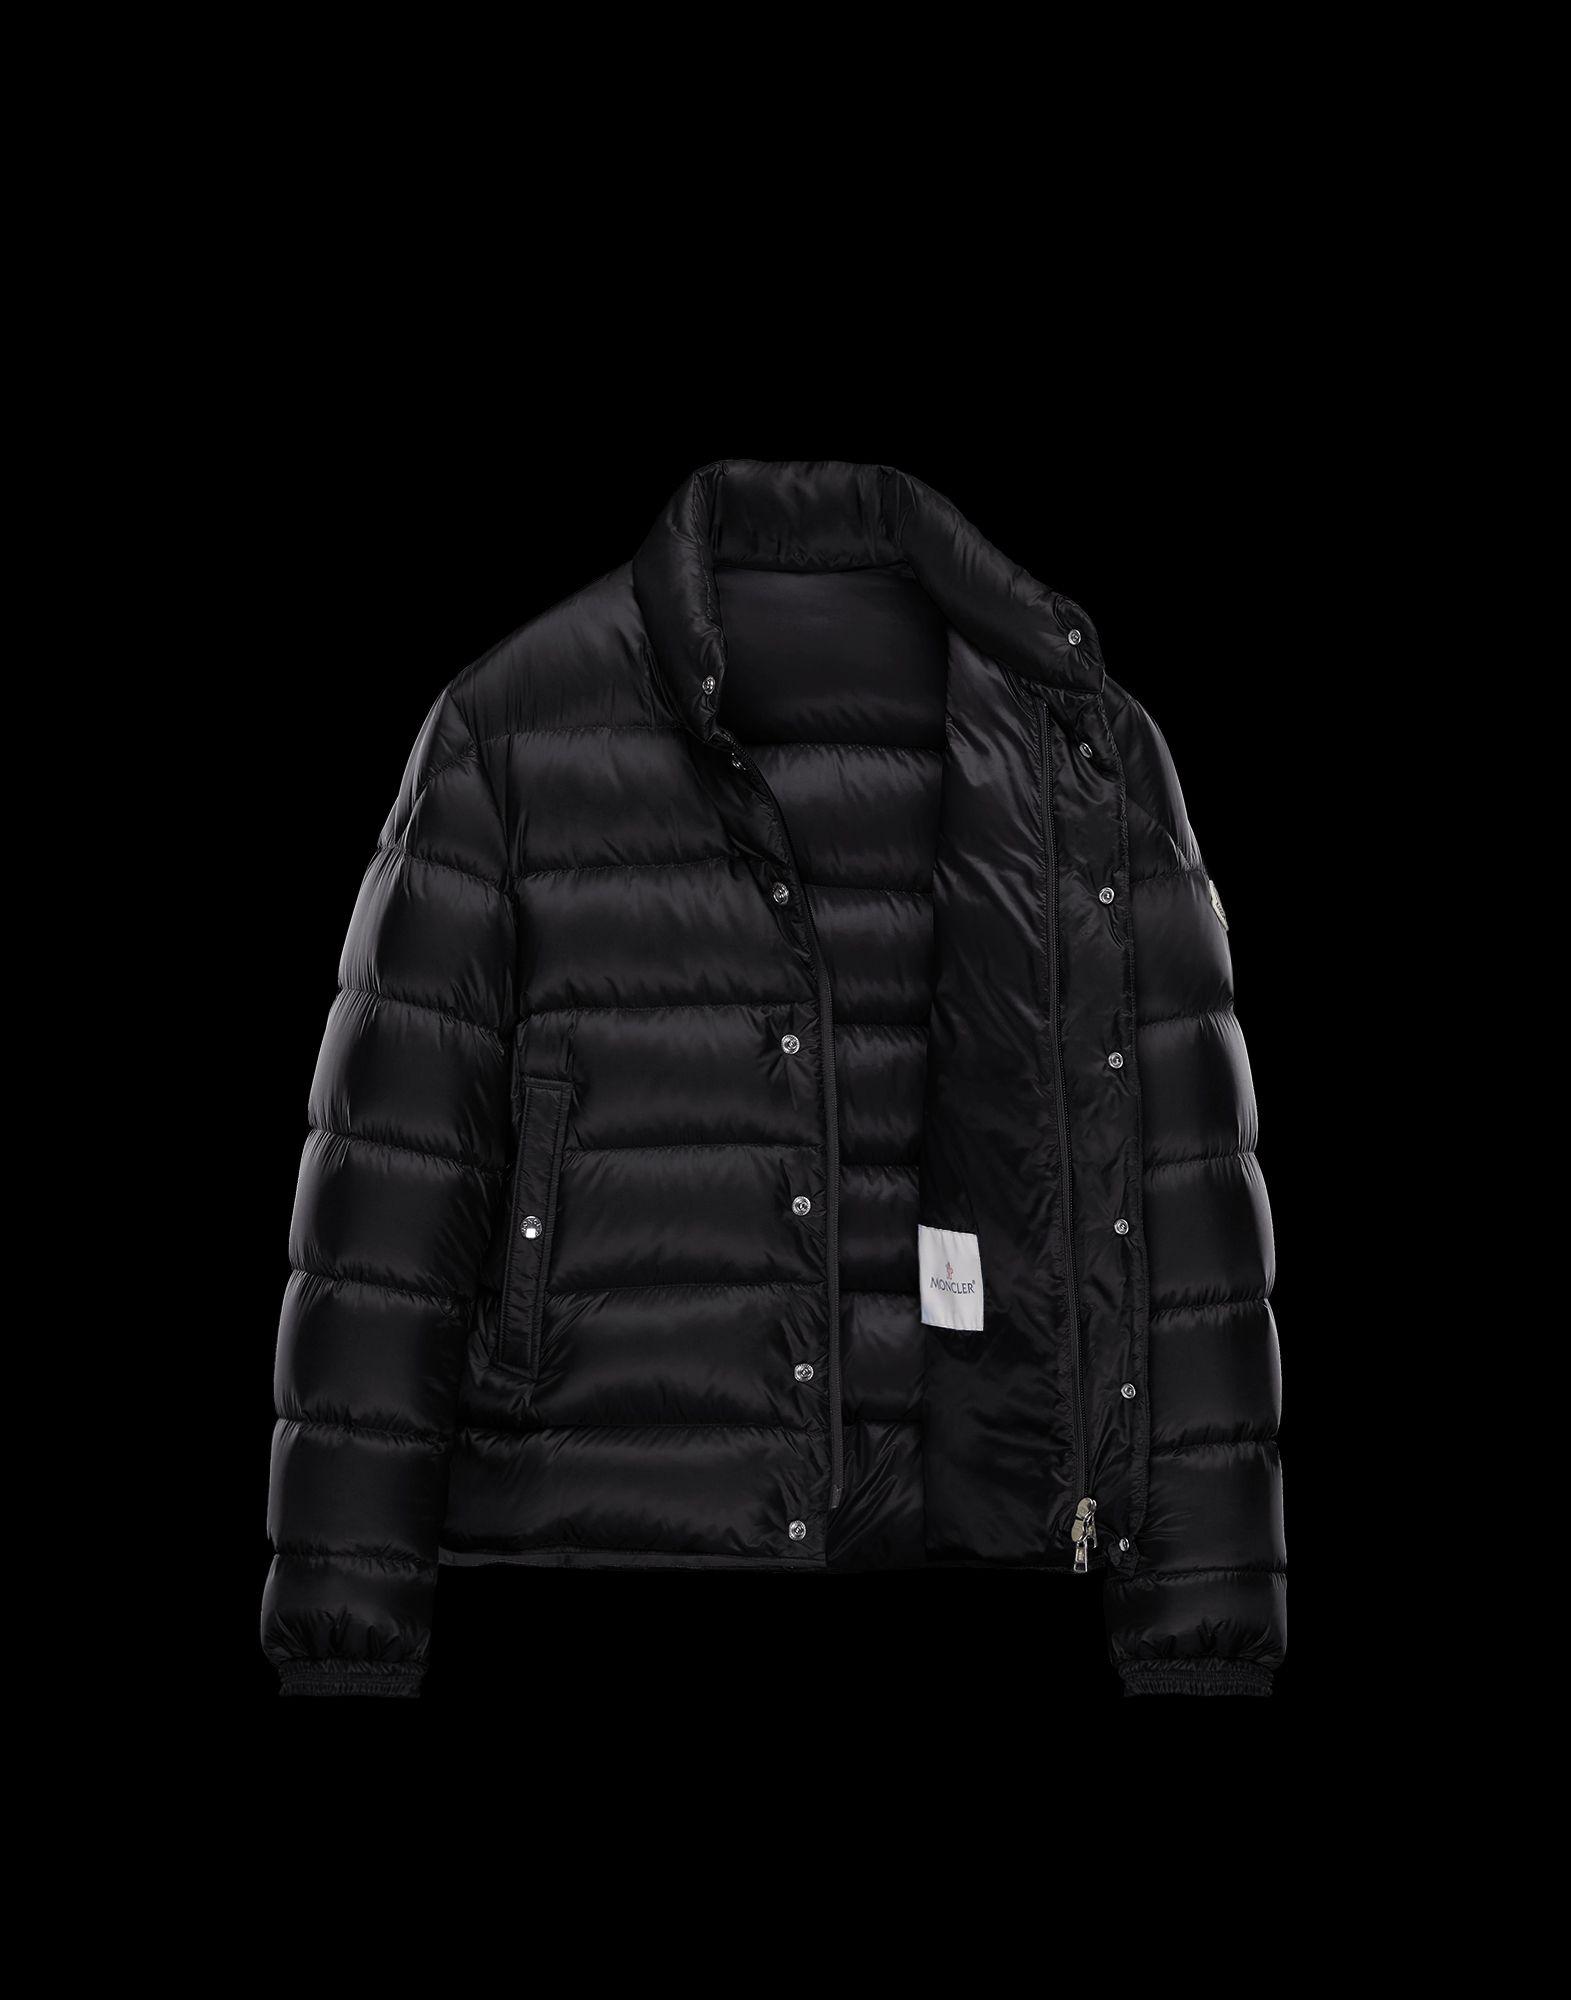 Moncler Piriac Jacket in Black for Men - Lyst